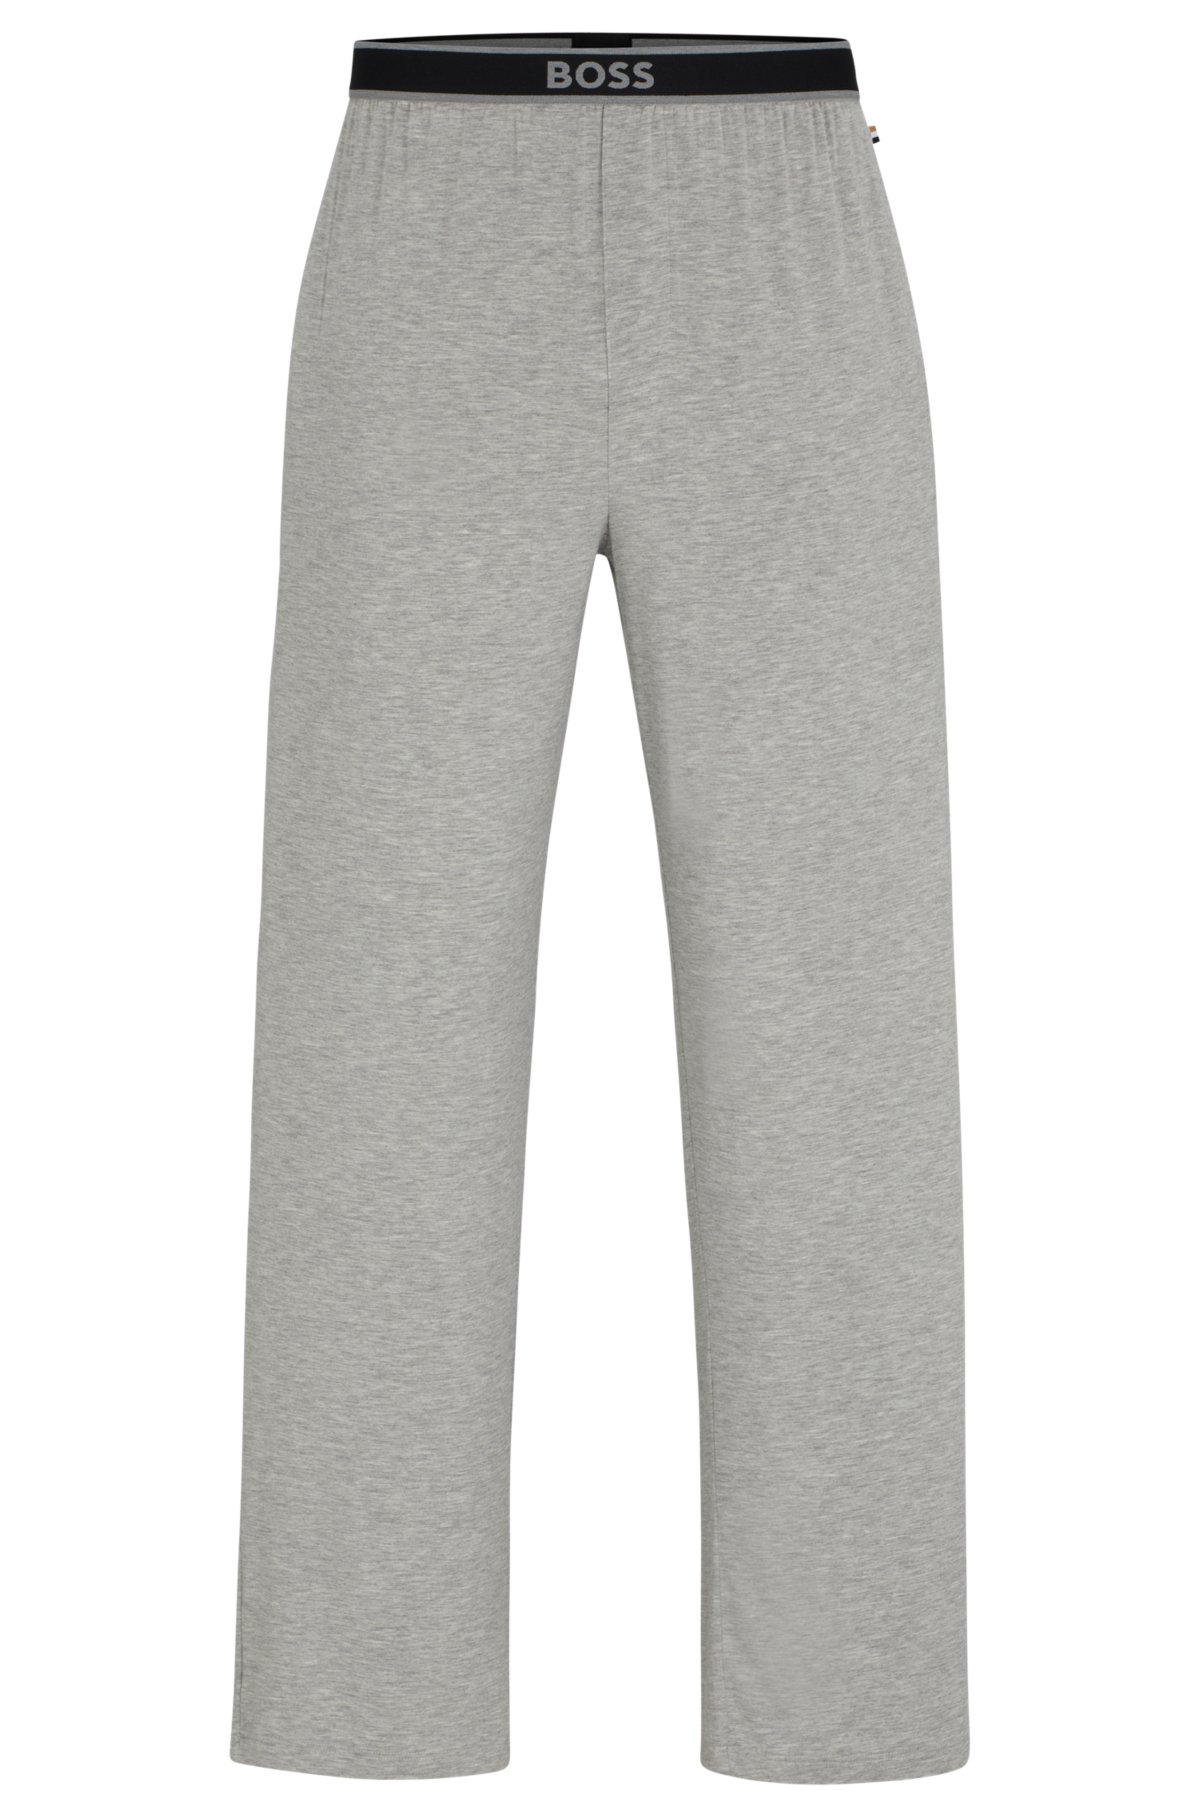 BOSS - with pajama Stretch-modal waistband bottoms logo